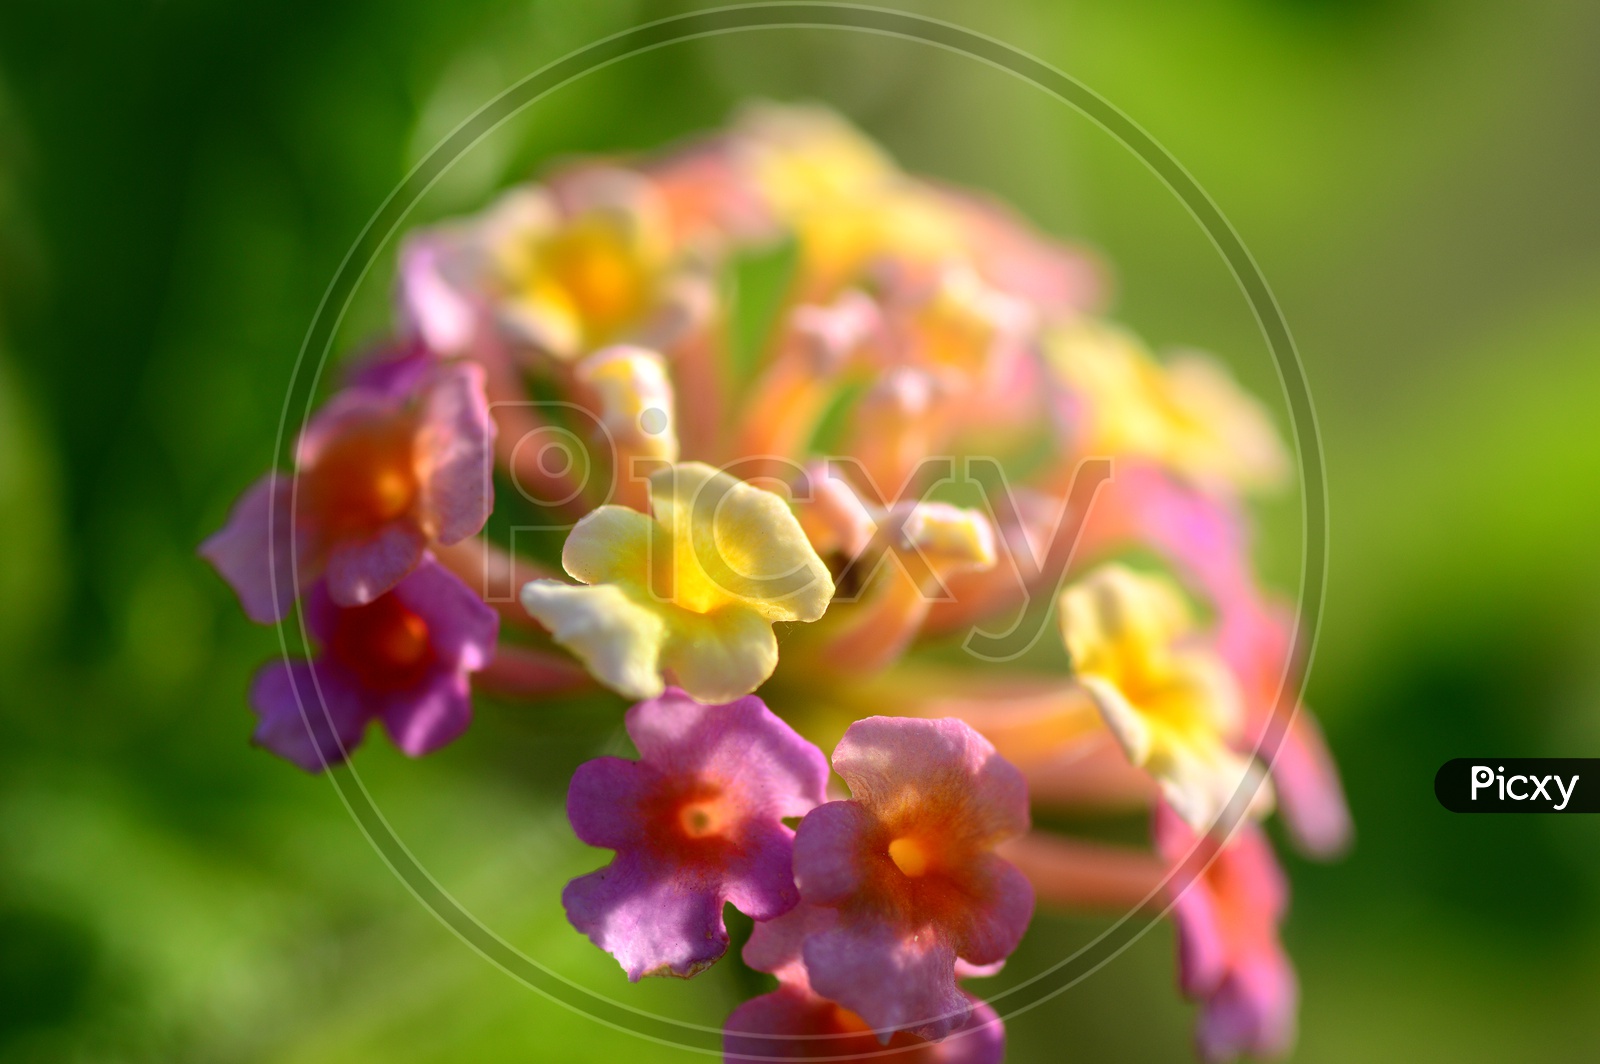 Close up shot of Colour flower